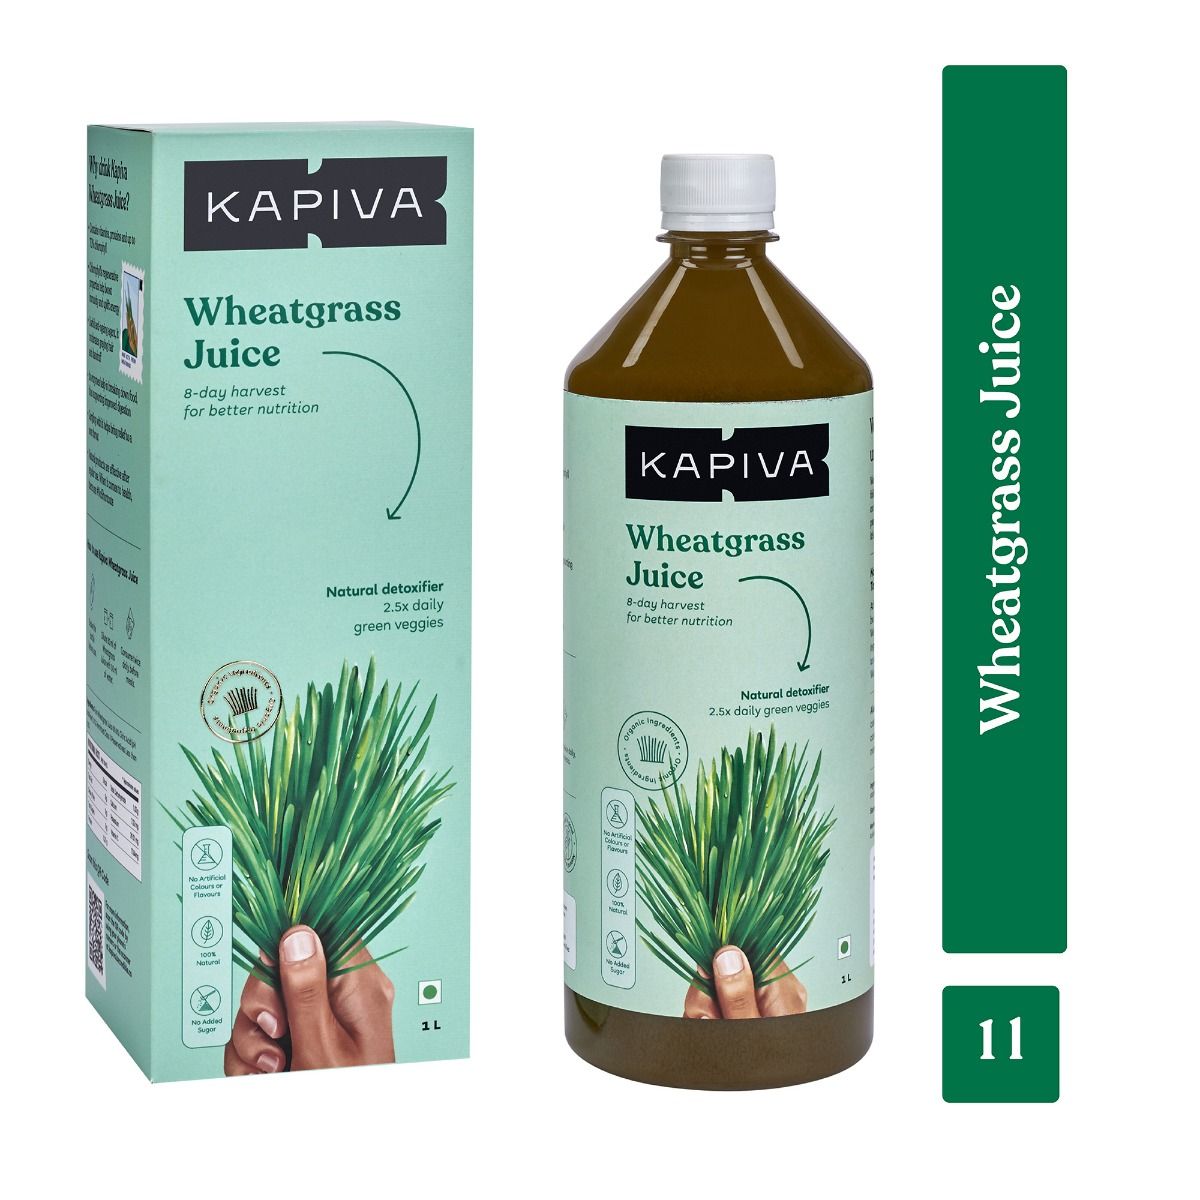 Buy Kapiva Wheatgrass Juice, 1 L Online